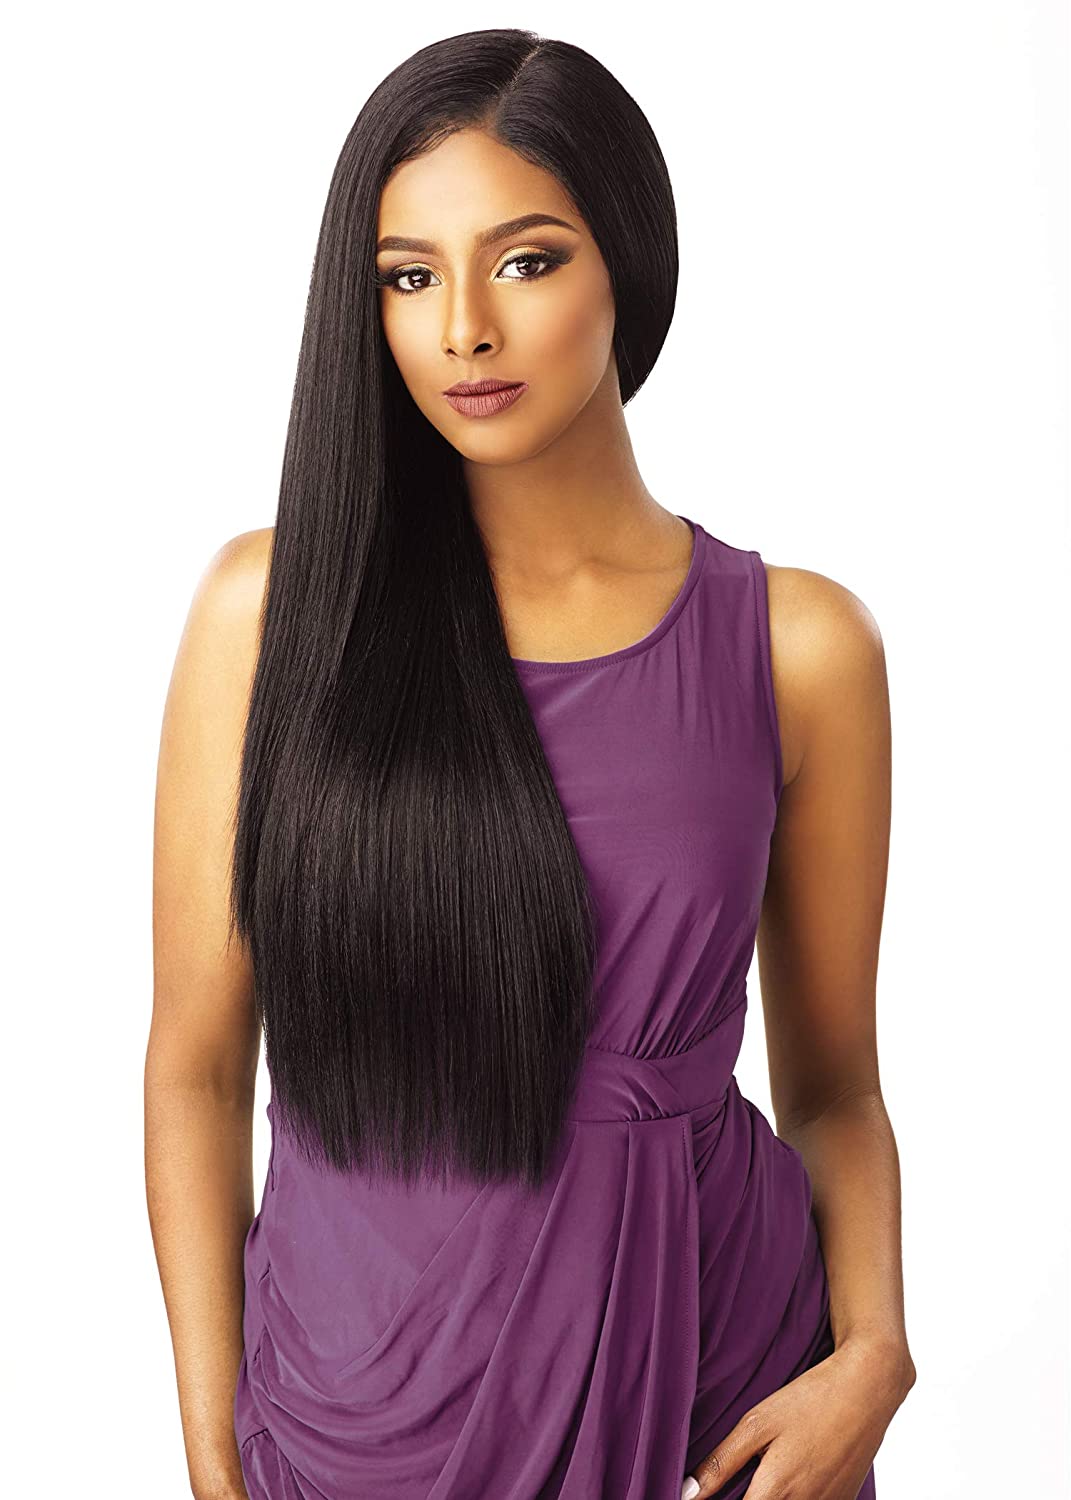 Lush Locks Synthetic Full Head Long Straight Hair Wig for Women.